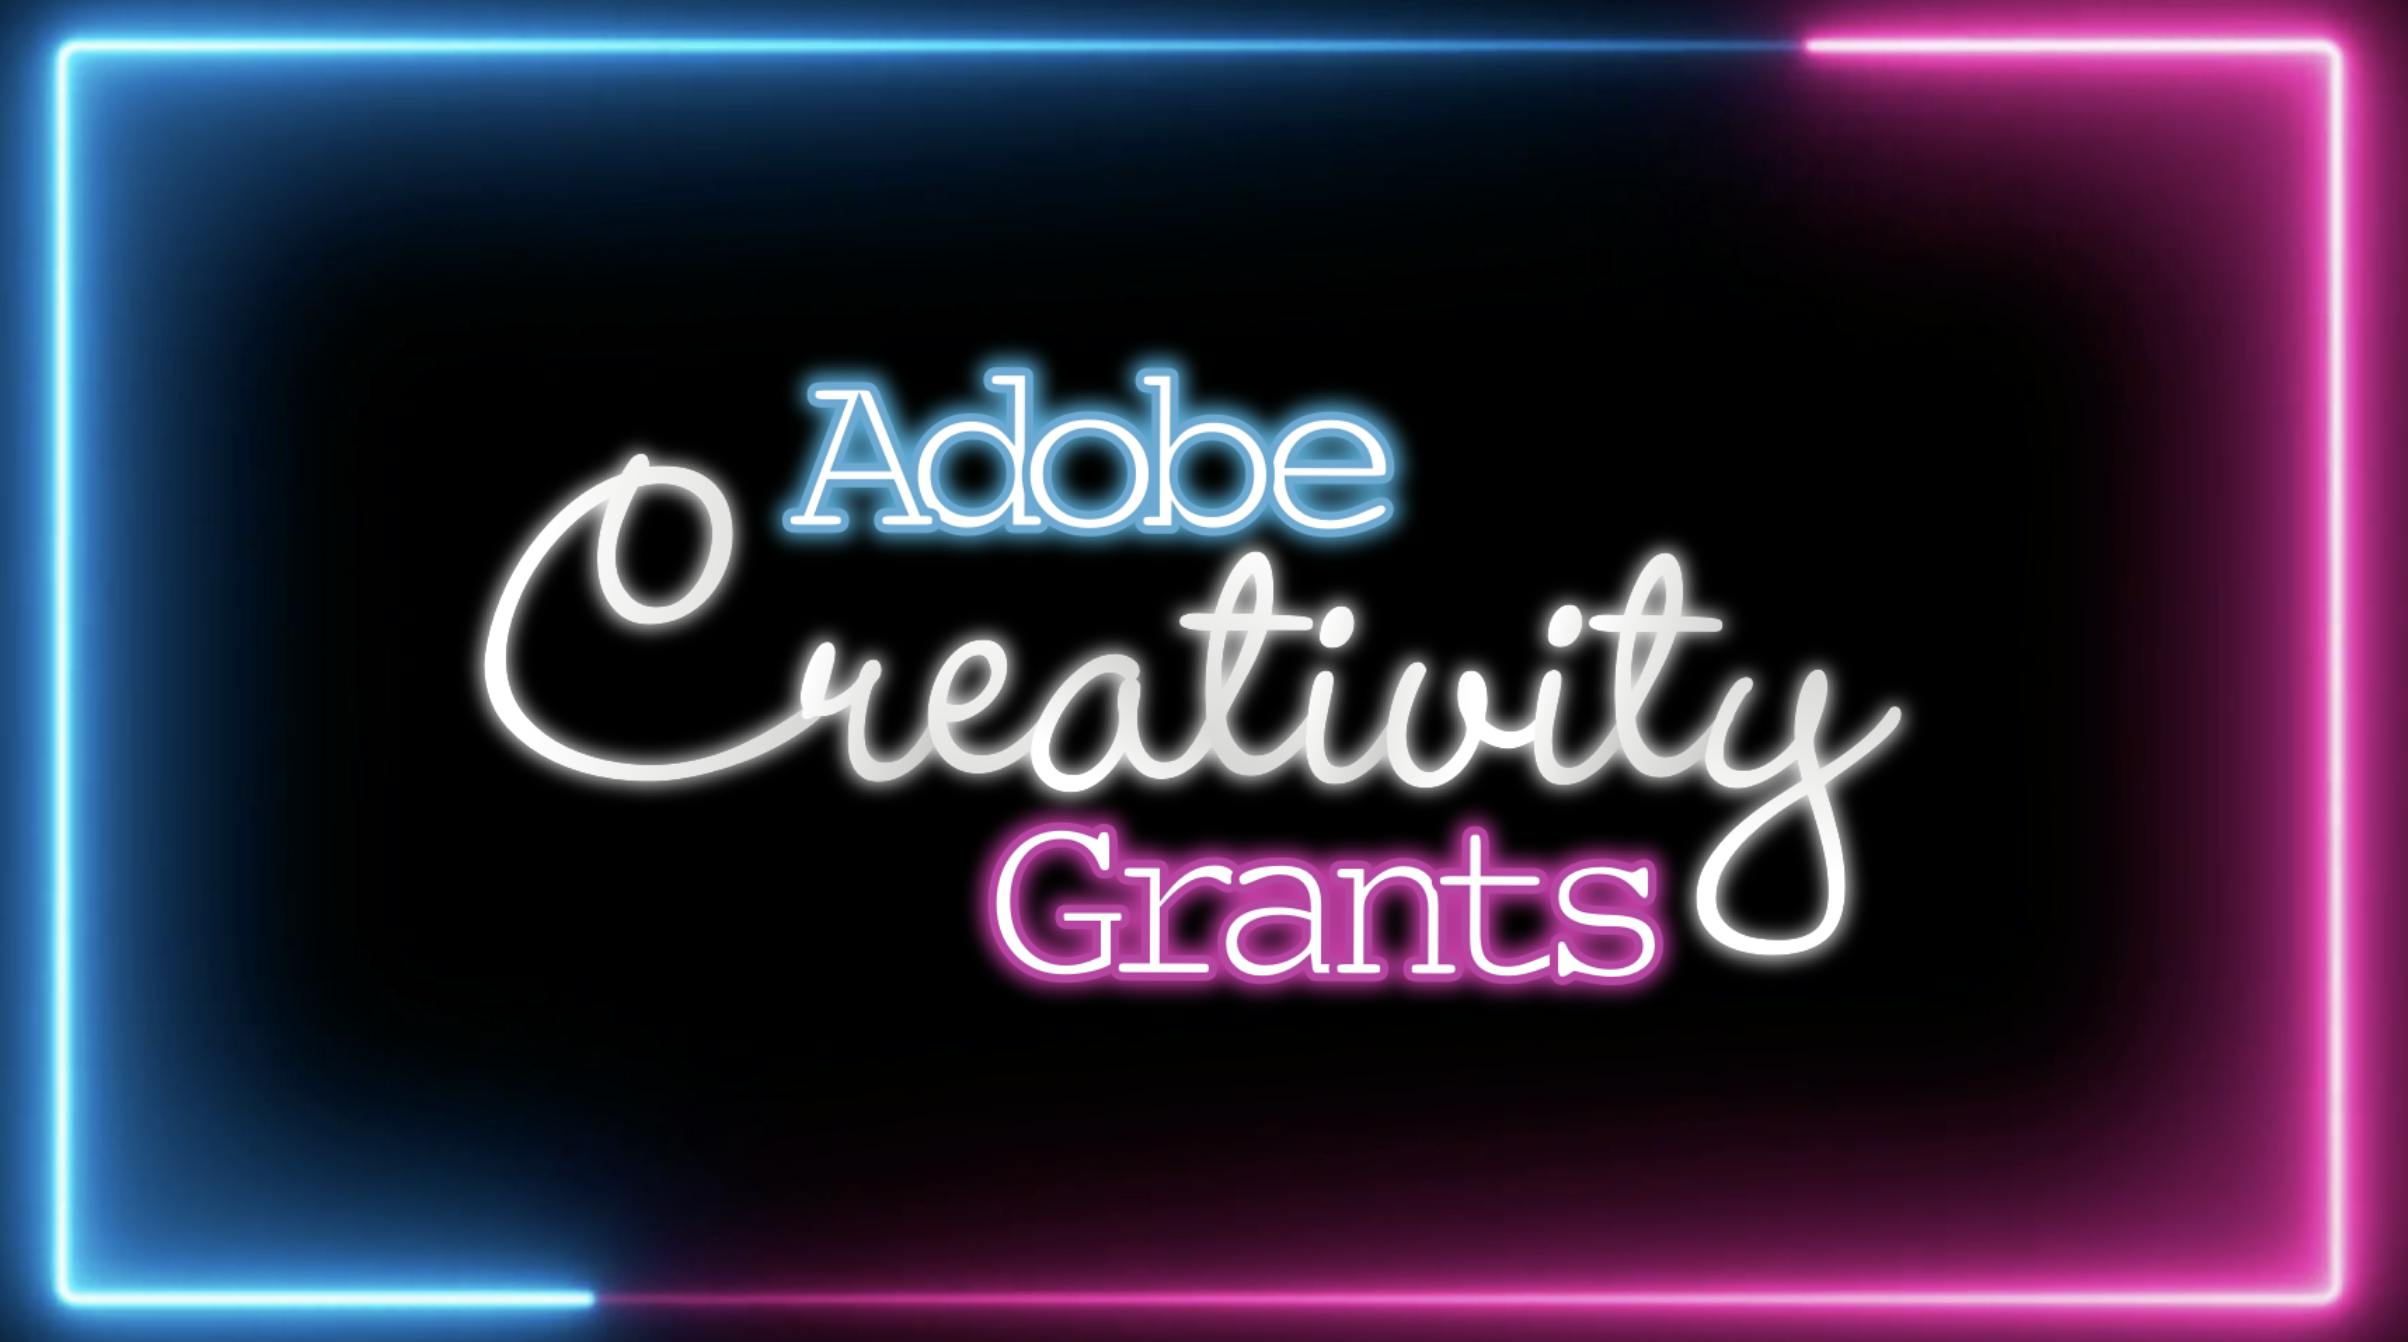 Adobe Creativity Grants